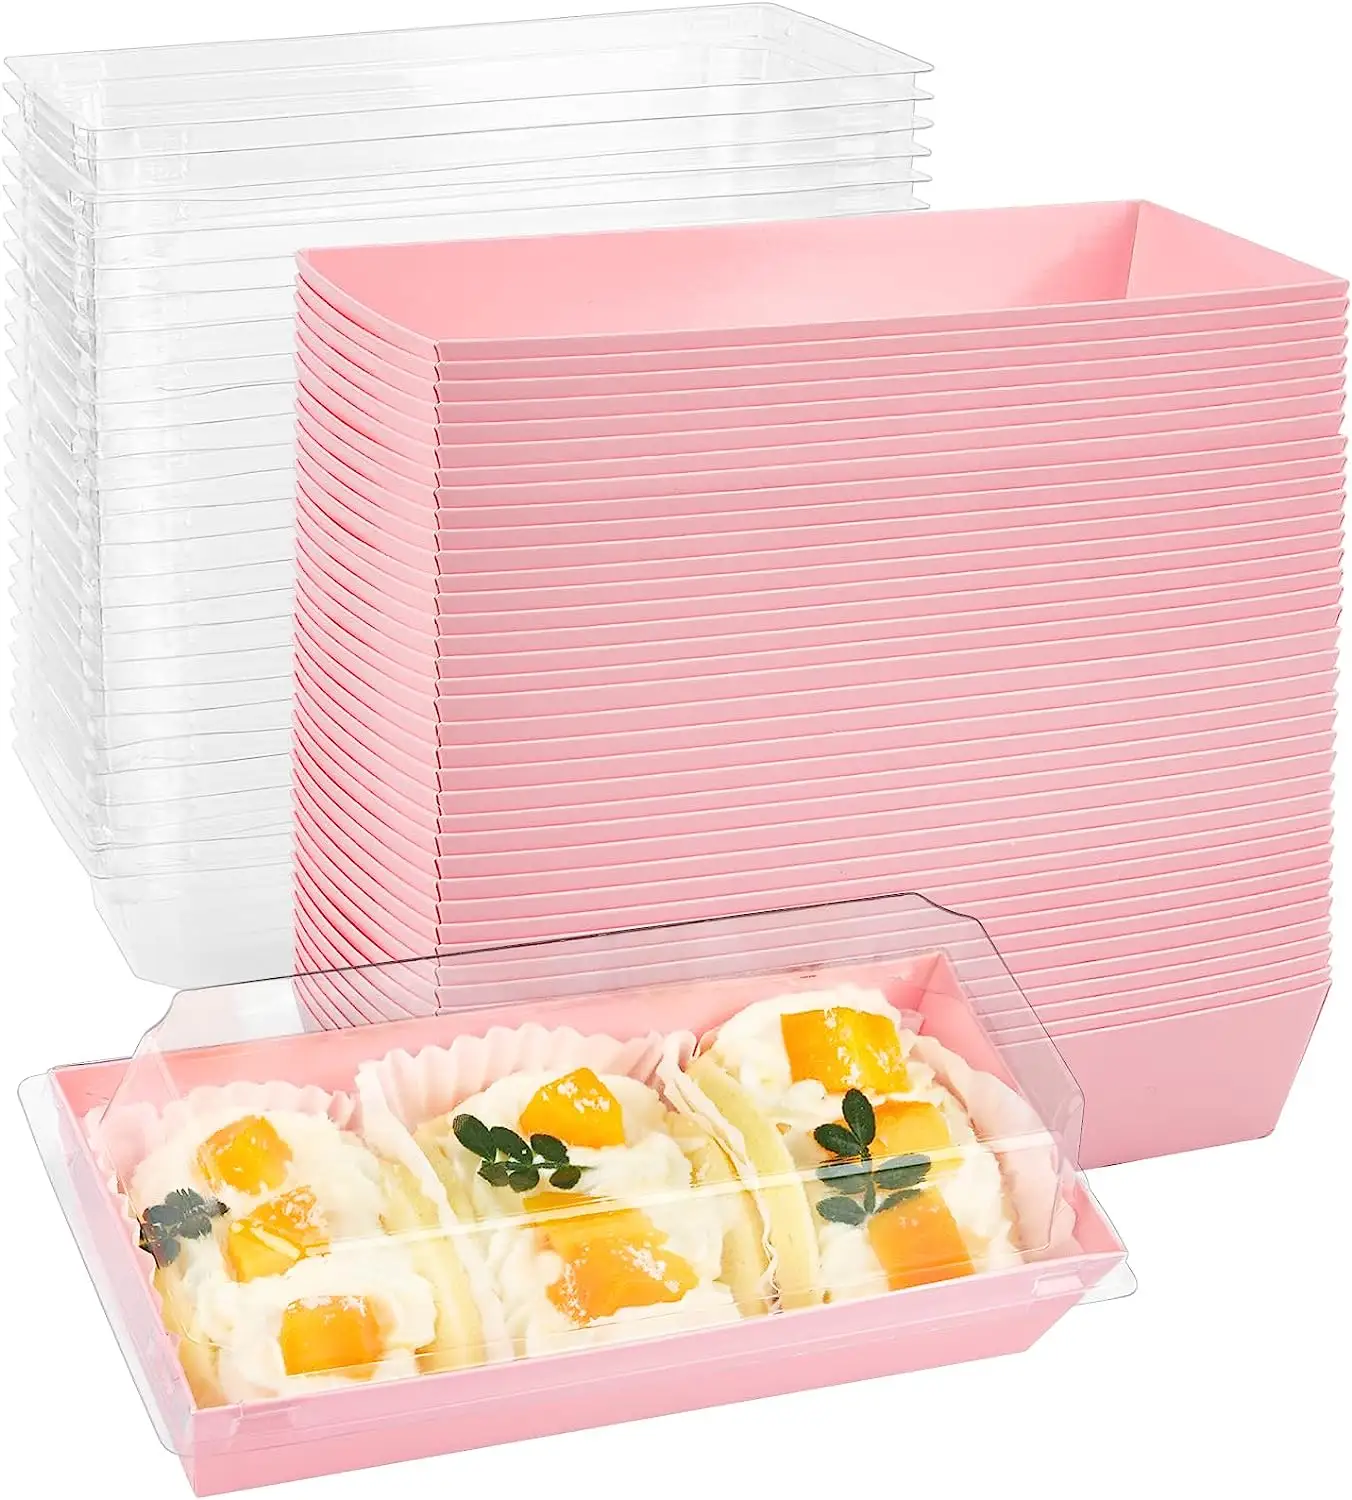 अनुकूलित पारिस्थितिकी रीसायकल उपहार भोजन बिस्कुट गुलाबी पेस्ट्री पैकिंग बक्से के साथ खिड़की मीठा कुकी पैकेजिंग गुलाबी स्पष्ट Macaron बॉक्स